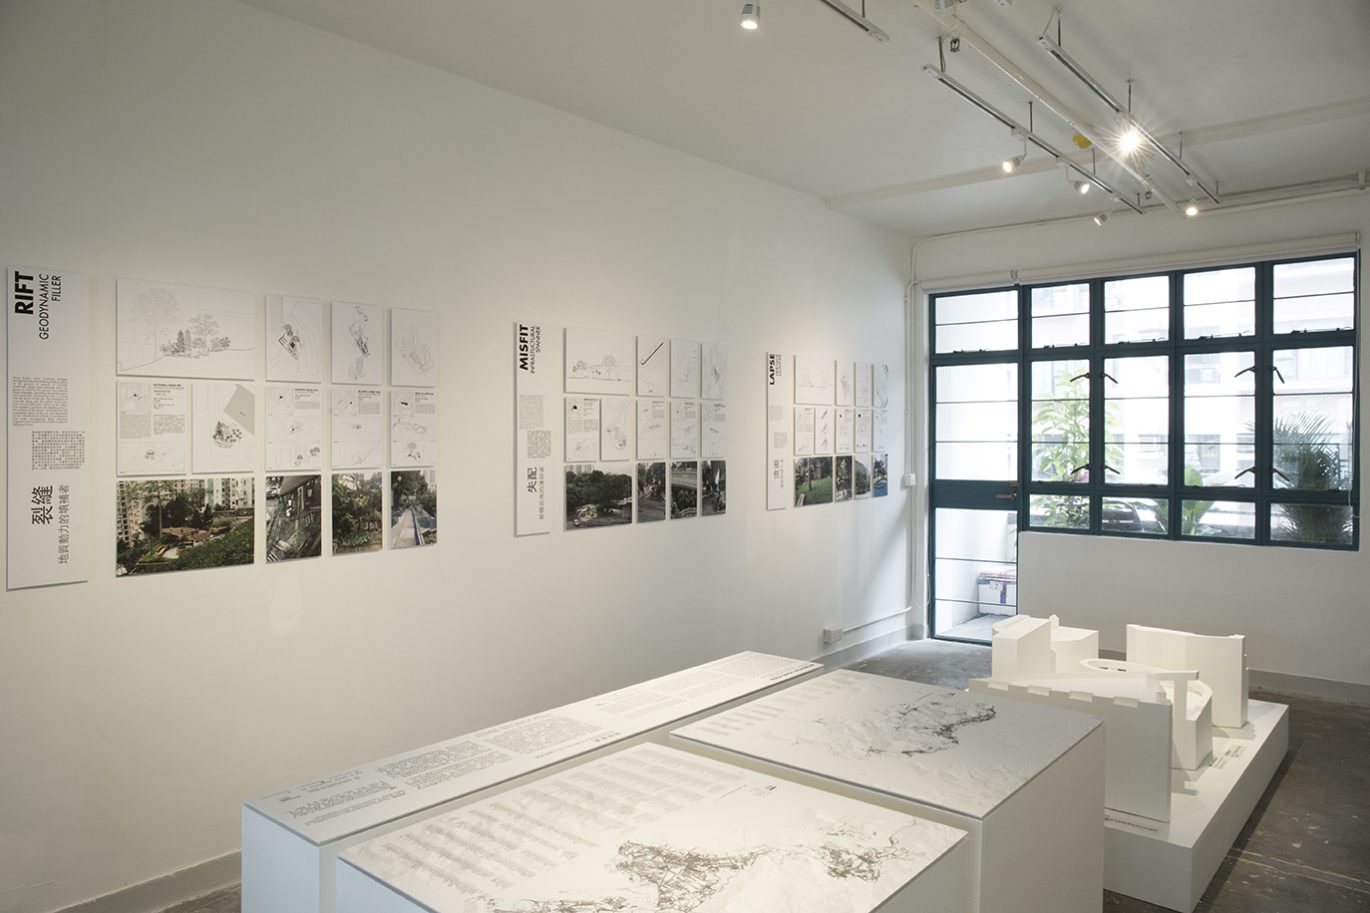 INTERSTITIAL HONG KONG: exhibition at PMQ